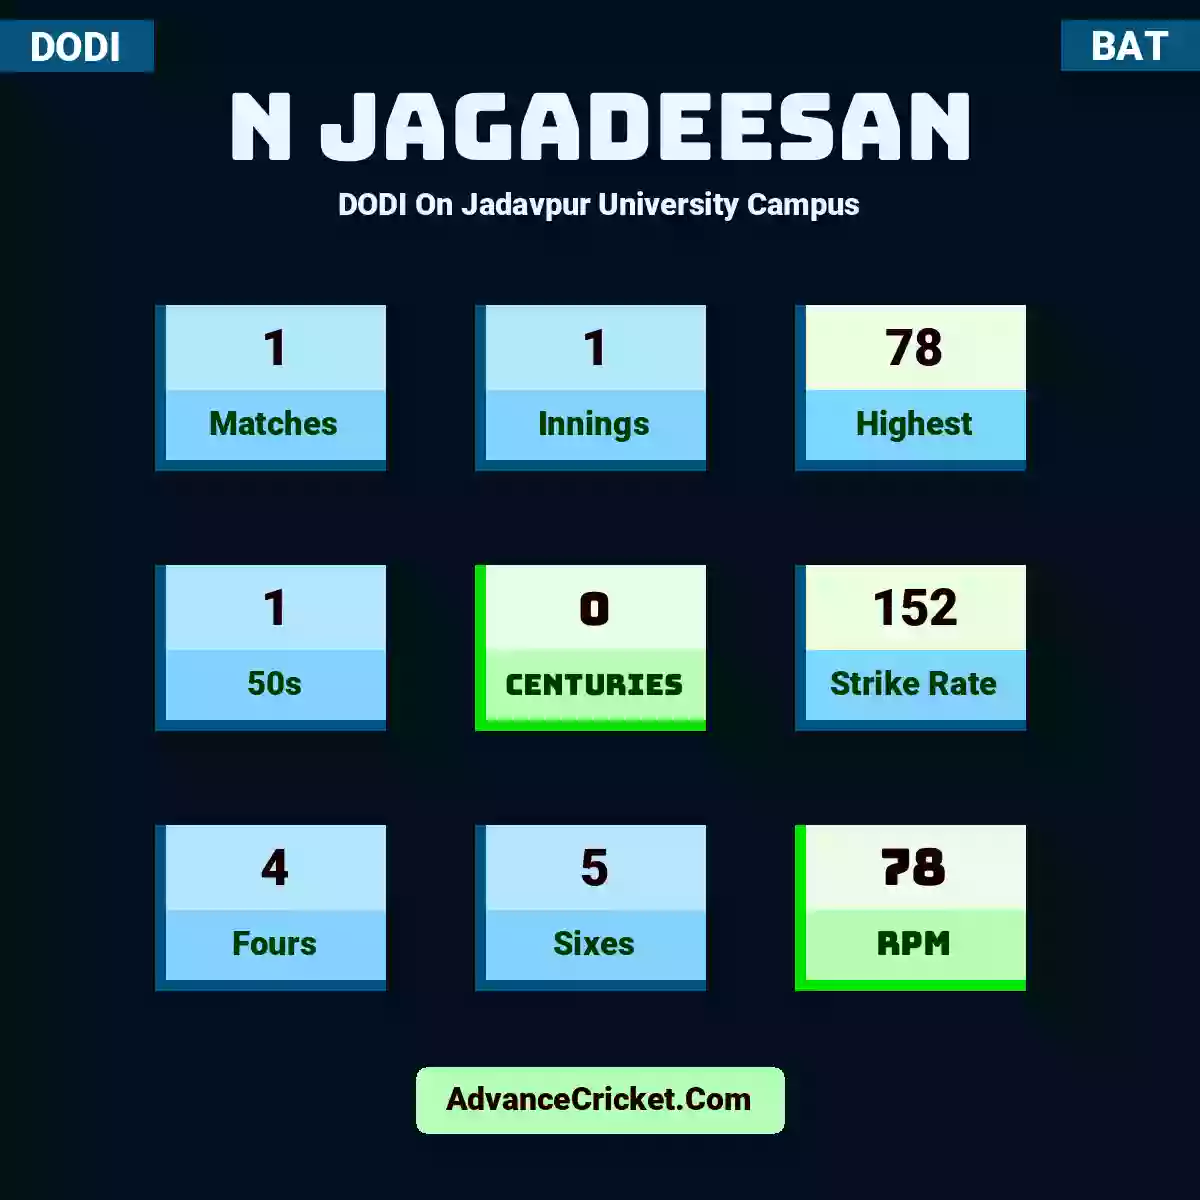 N Jagadeesan DODI  On Jadavpur University Campus, N Jagadeesan played 1 matches, scored 78 runs as highest, 1 half-centuries, and 0 centuries, with a strike rate of 152. N.Jagadeesan hit 4 fours and 5 sixes, with an RPM of 78.